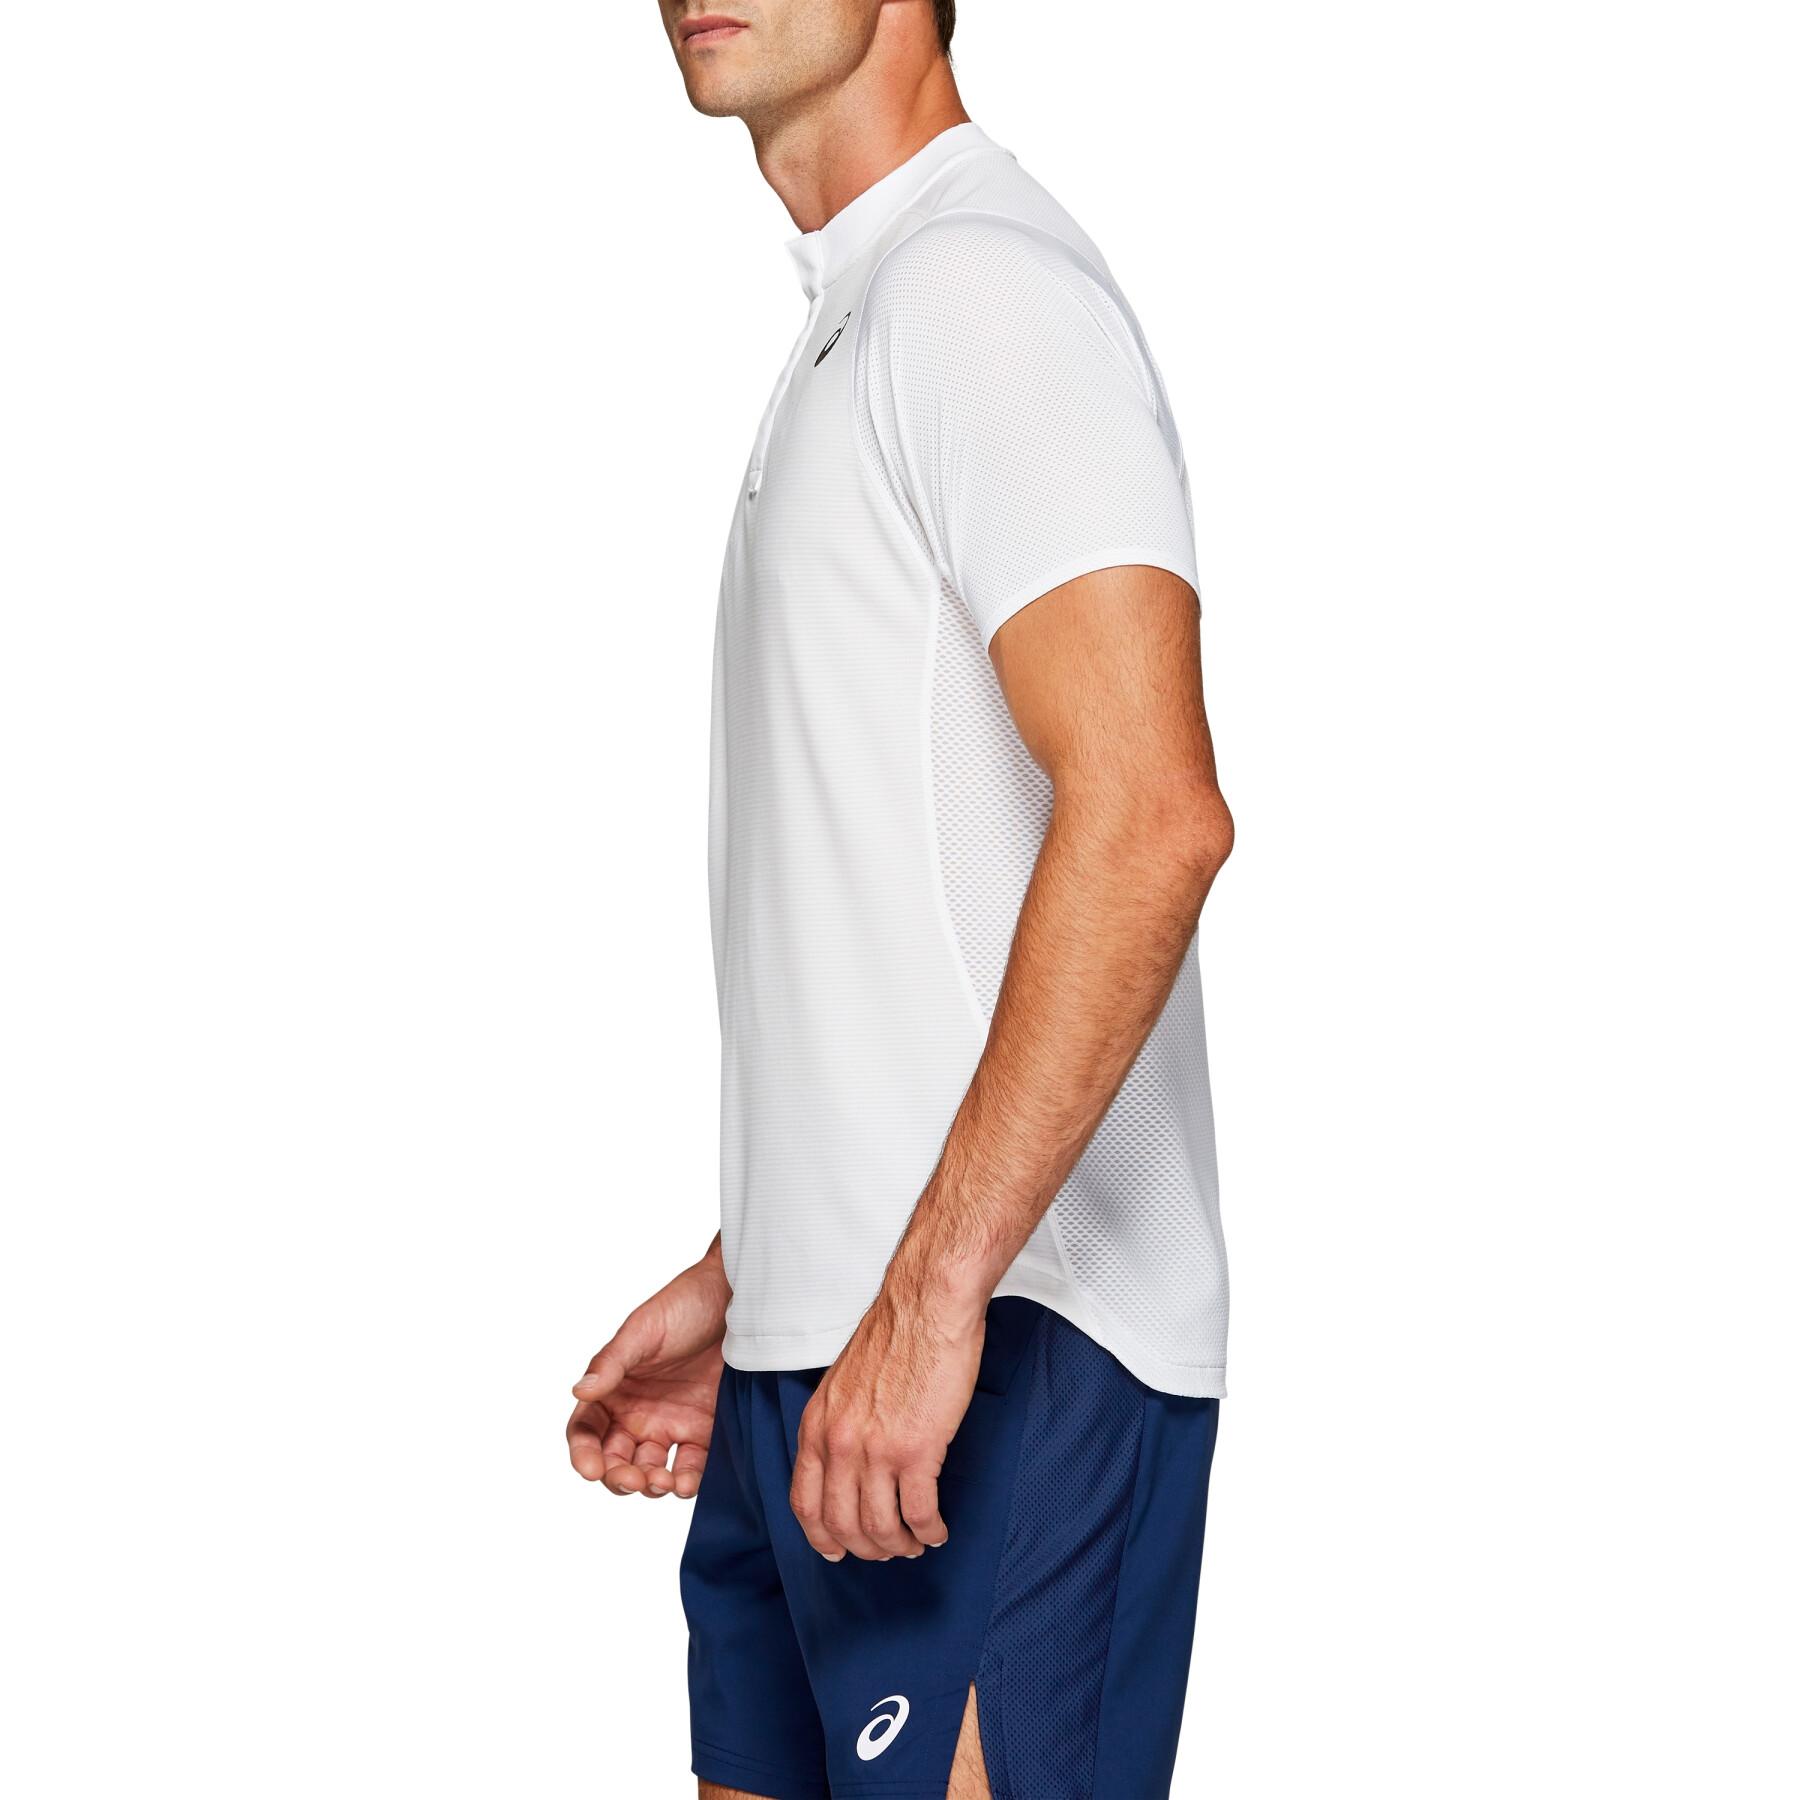 Koszulka Asics Gel Cool Polo Shirt